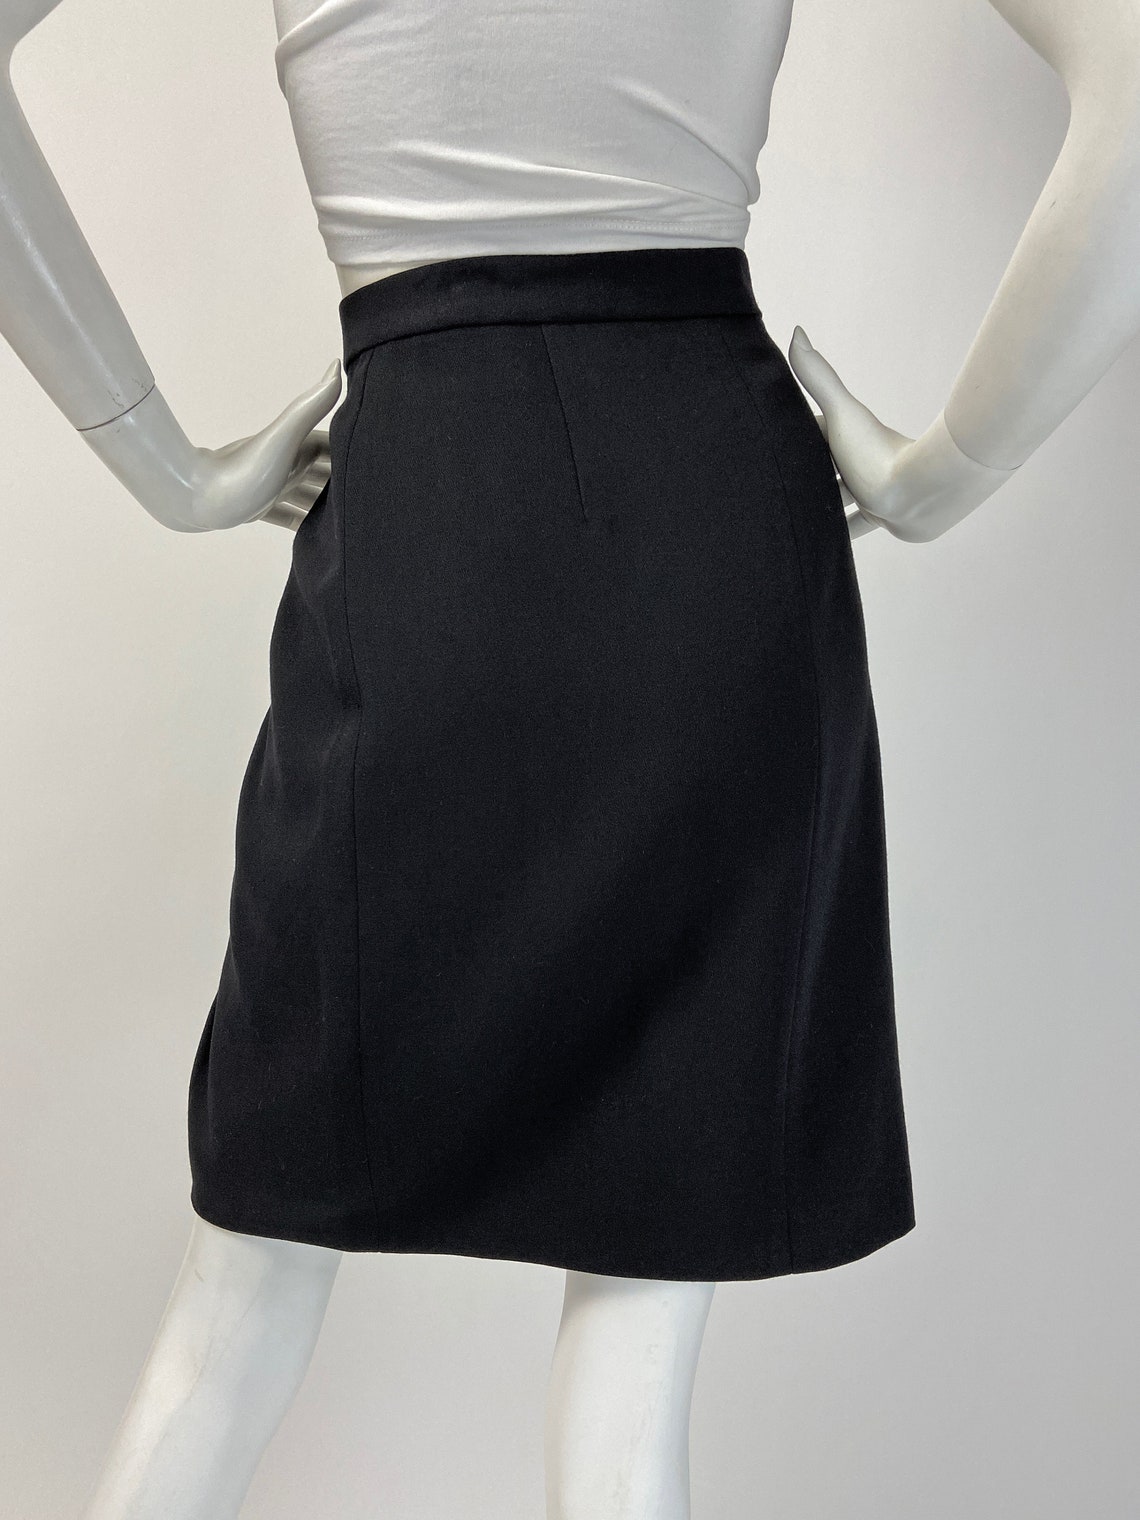 Vintage 90s Emporio Armani Skirt Black Wool Skirt Designer | Etsy